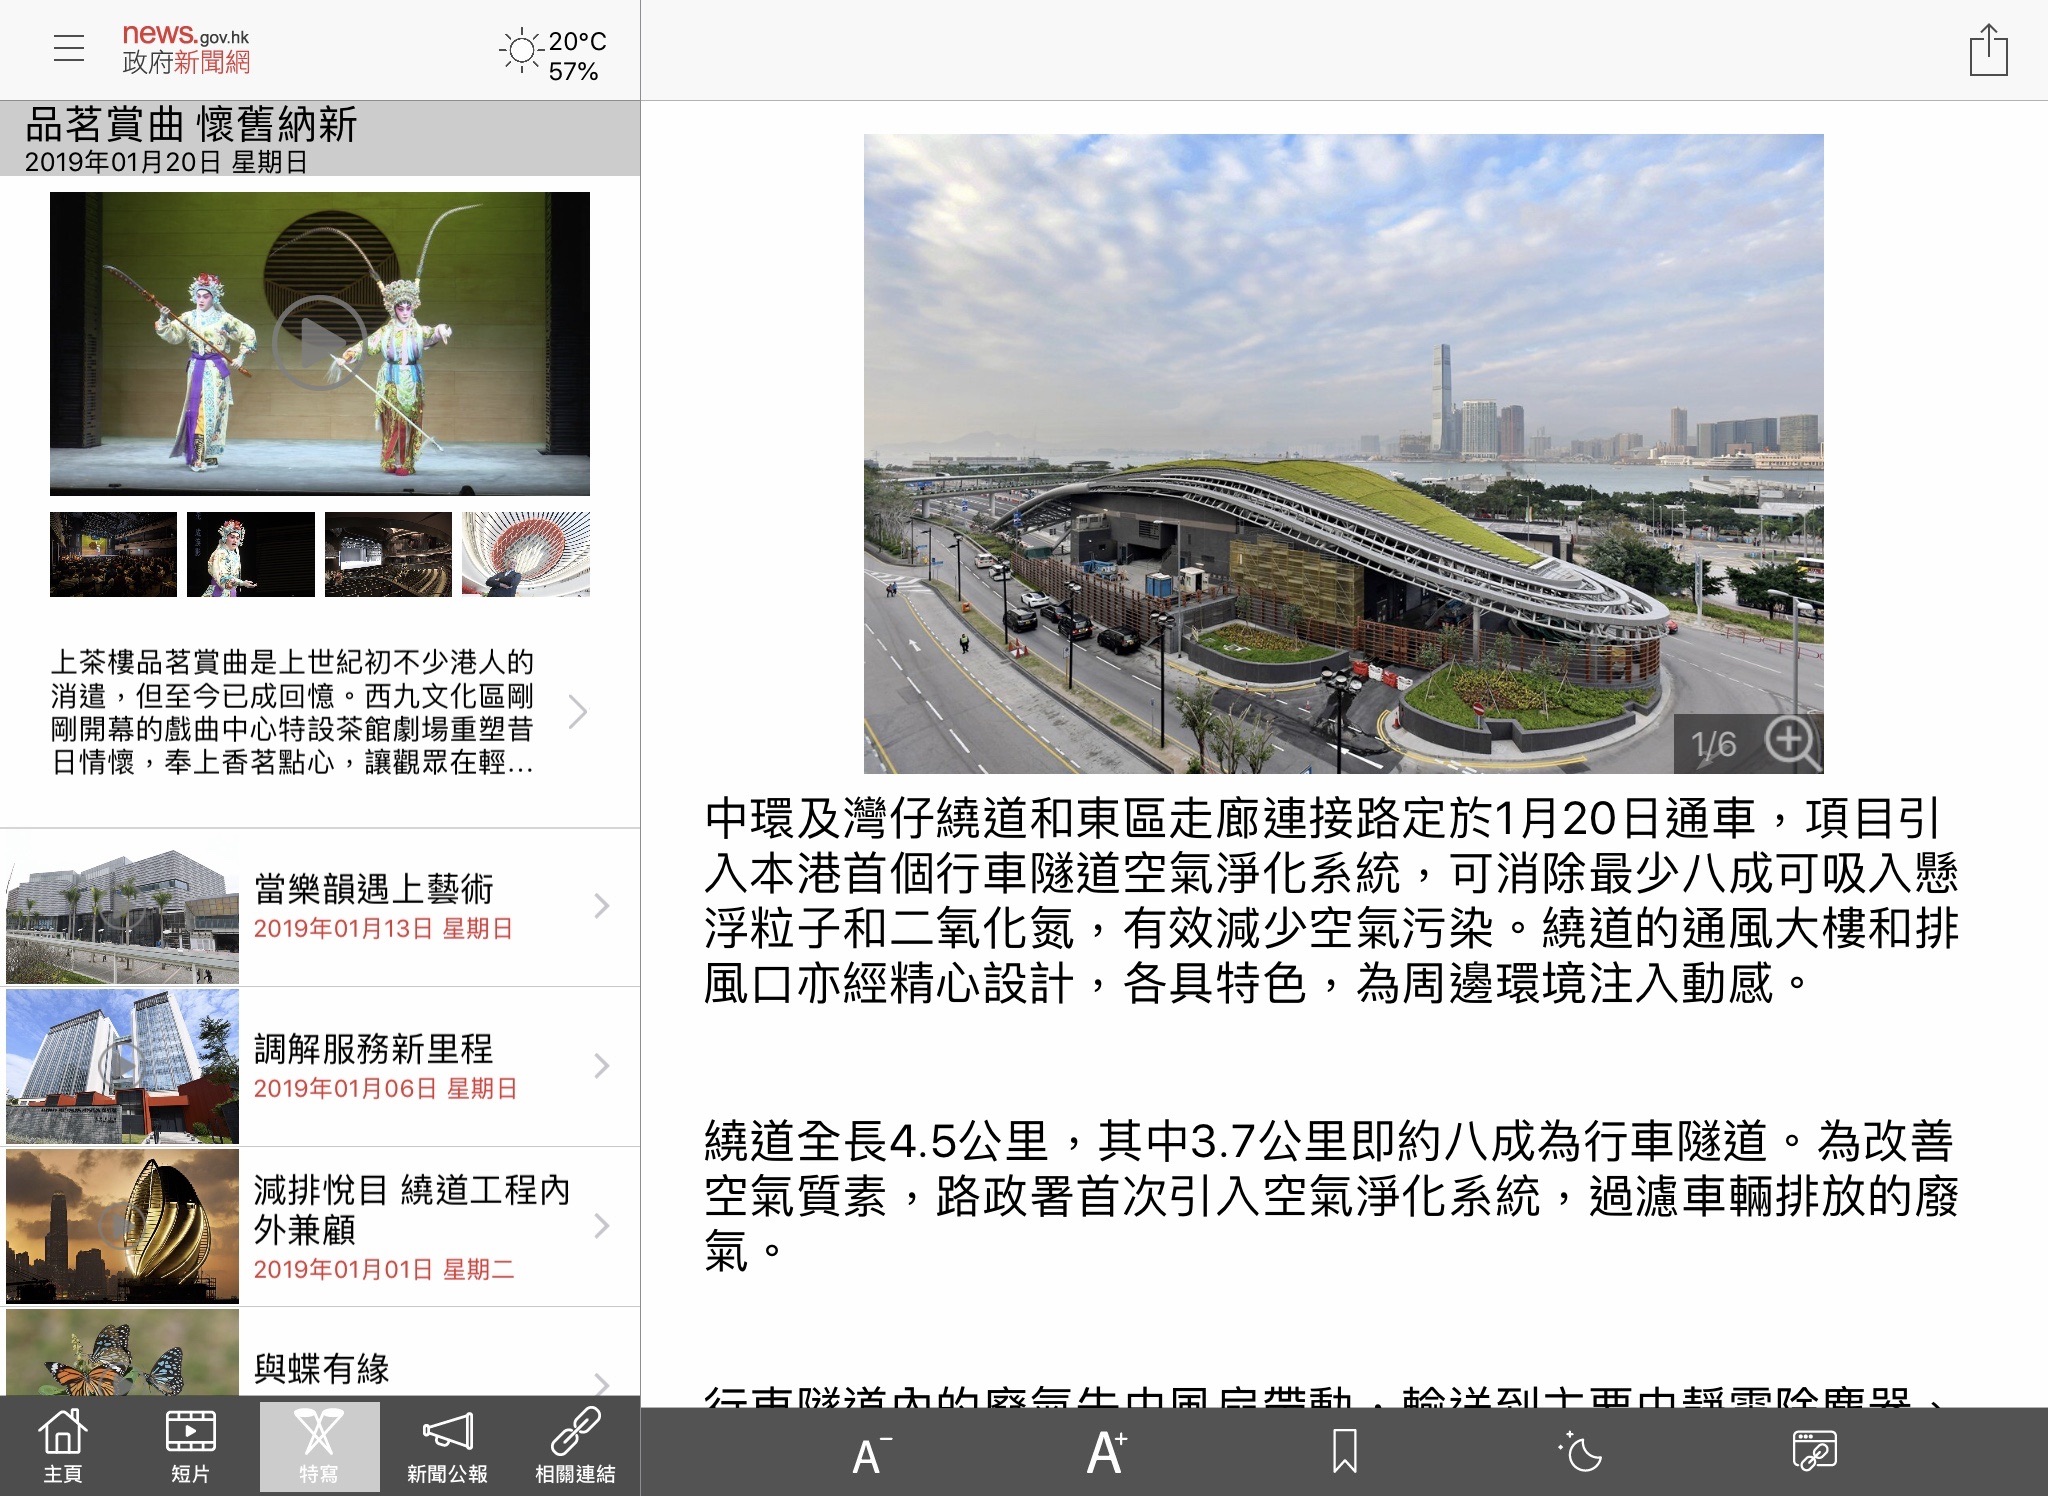 news.gov.hk 香港政府新聞網 screenshot 3